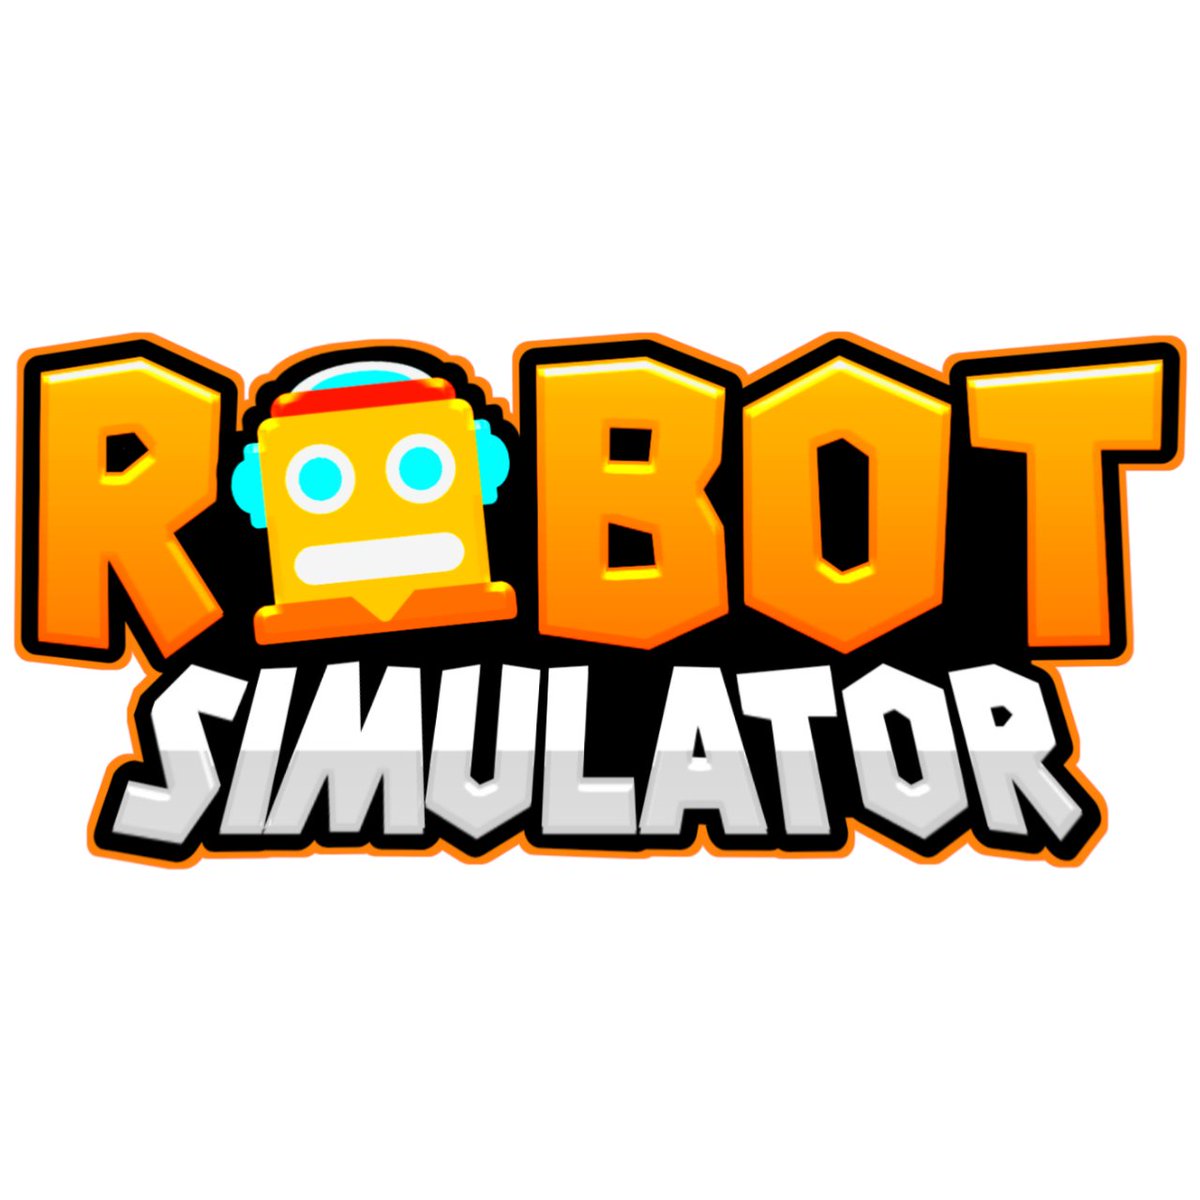 Roblox simulator logo